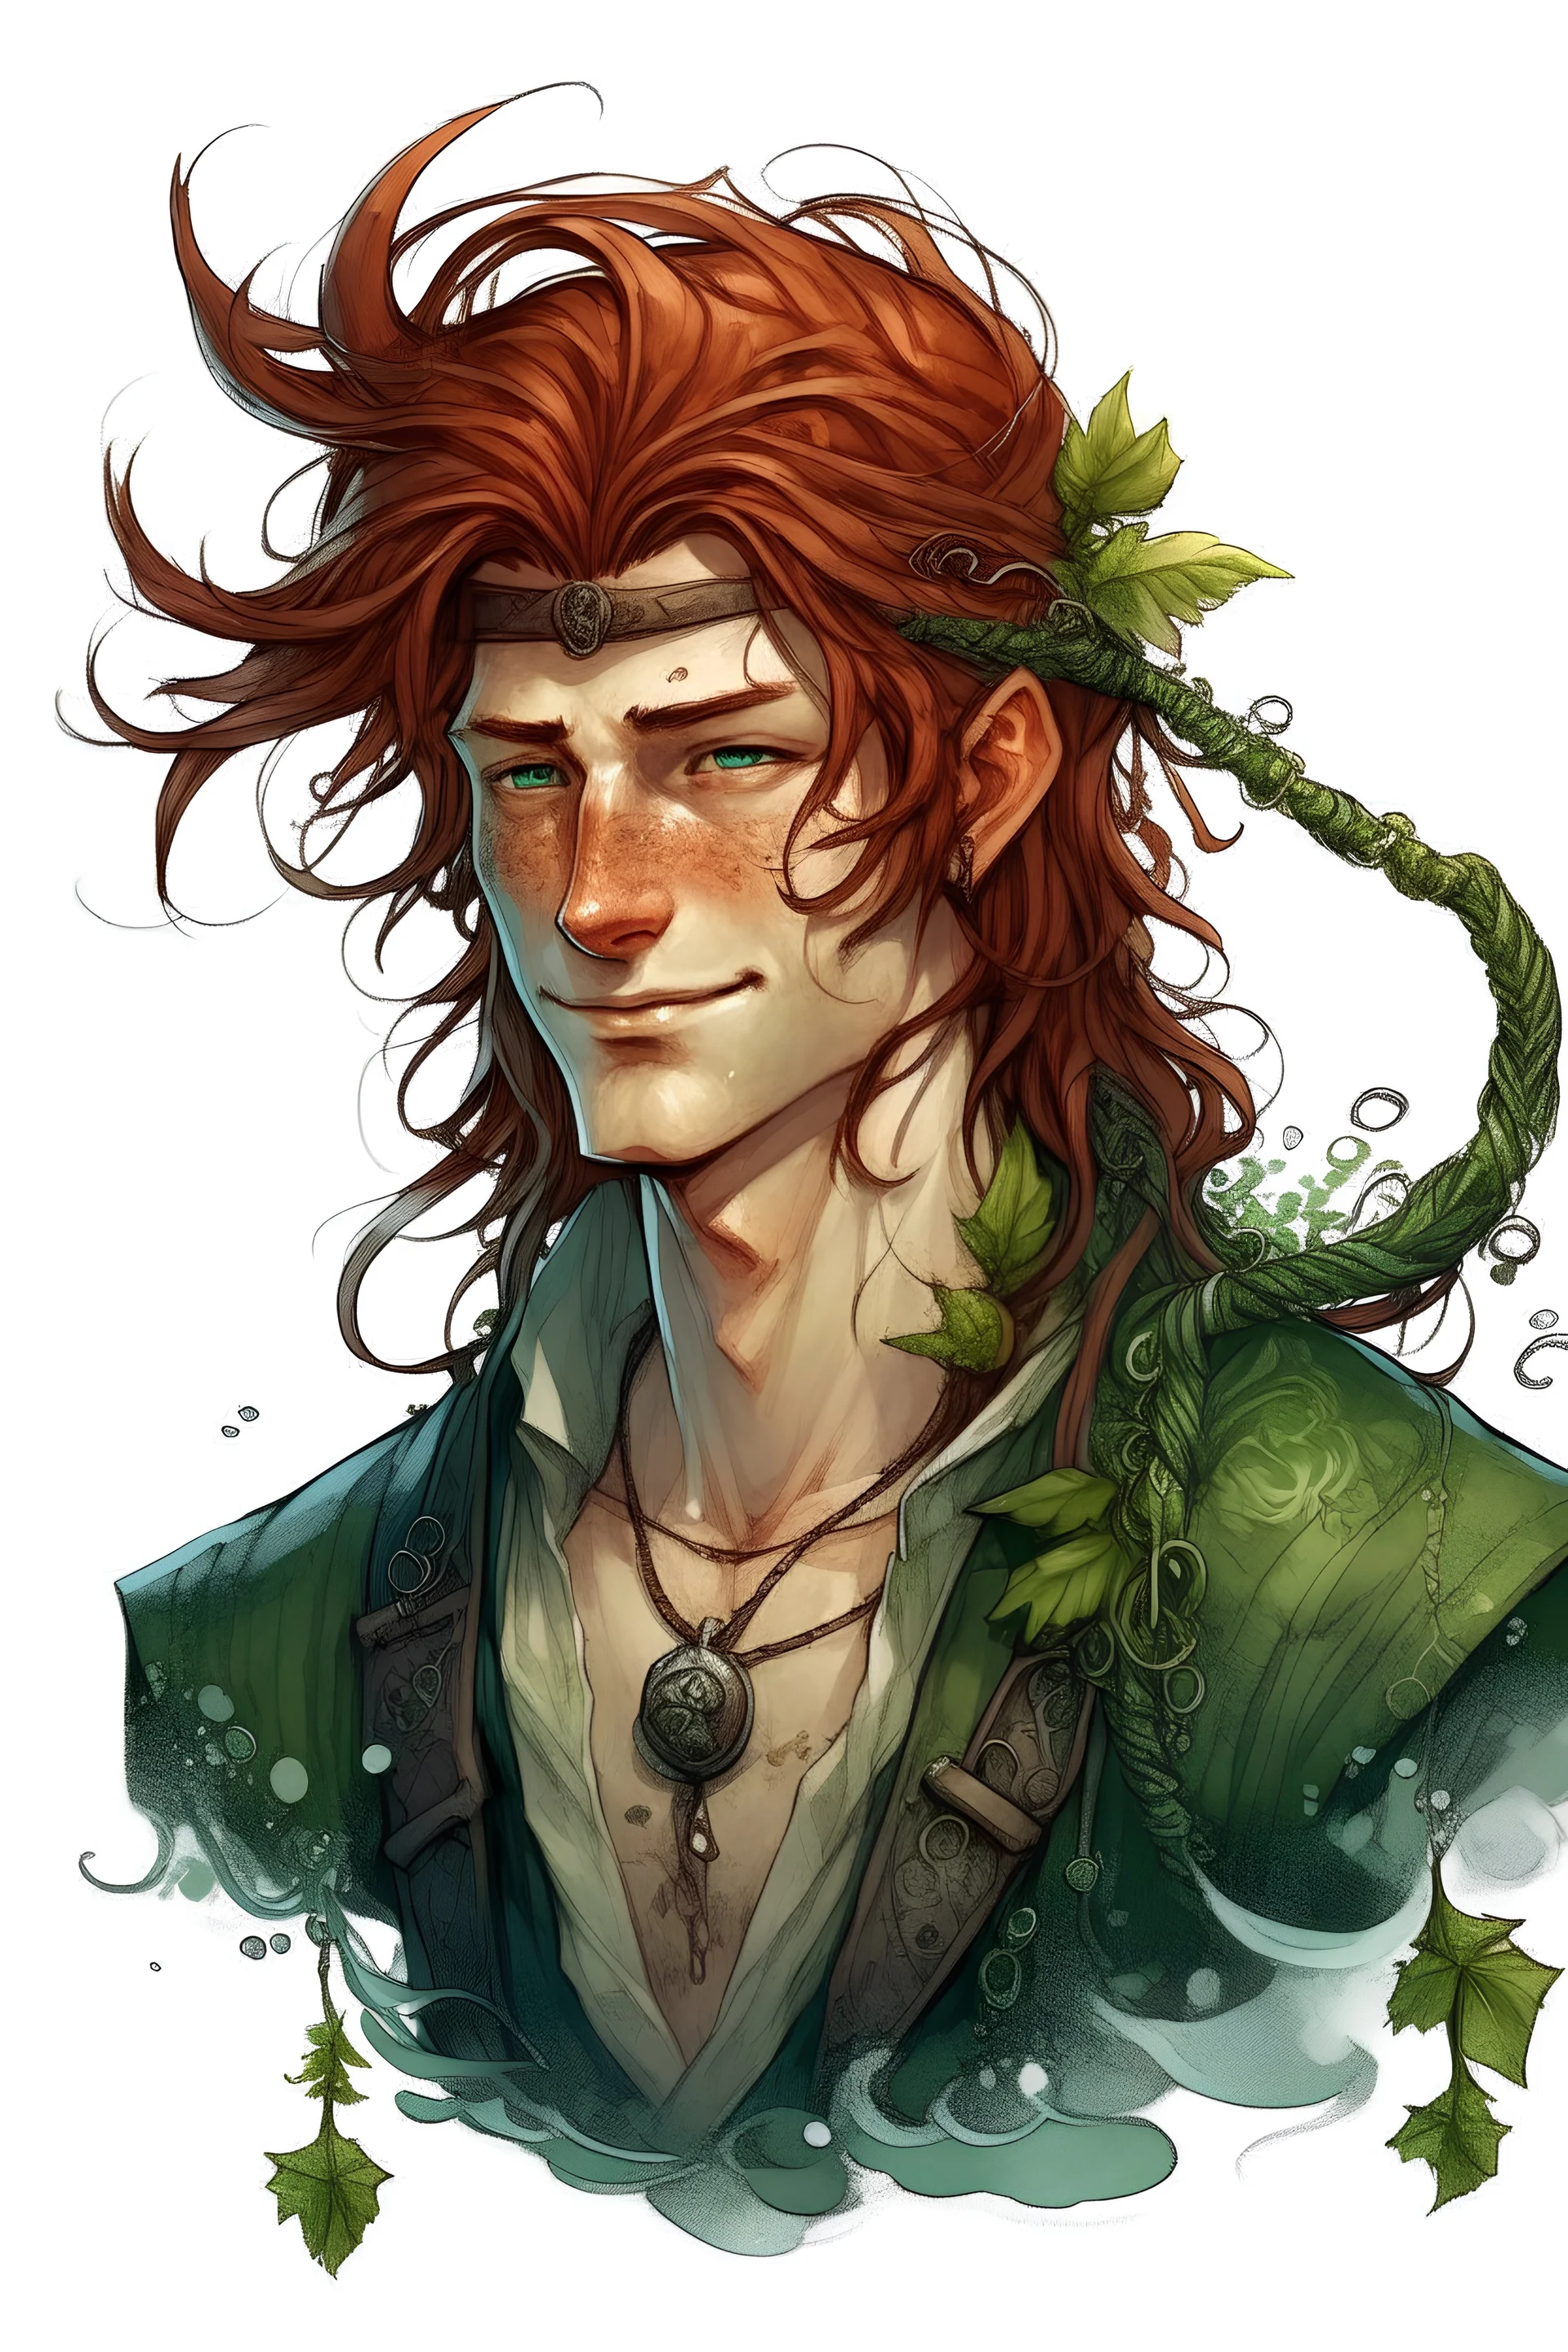 wet pirate nereid male with seaweed in auburn hair